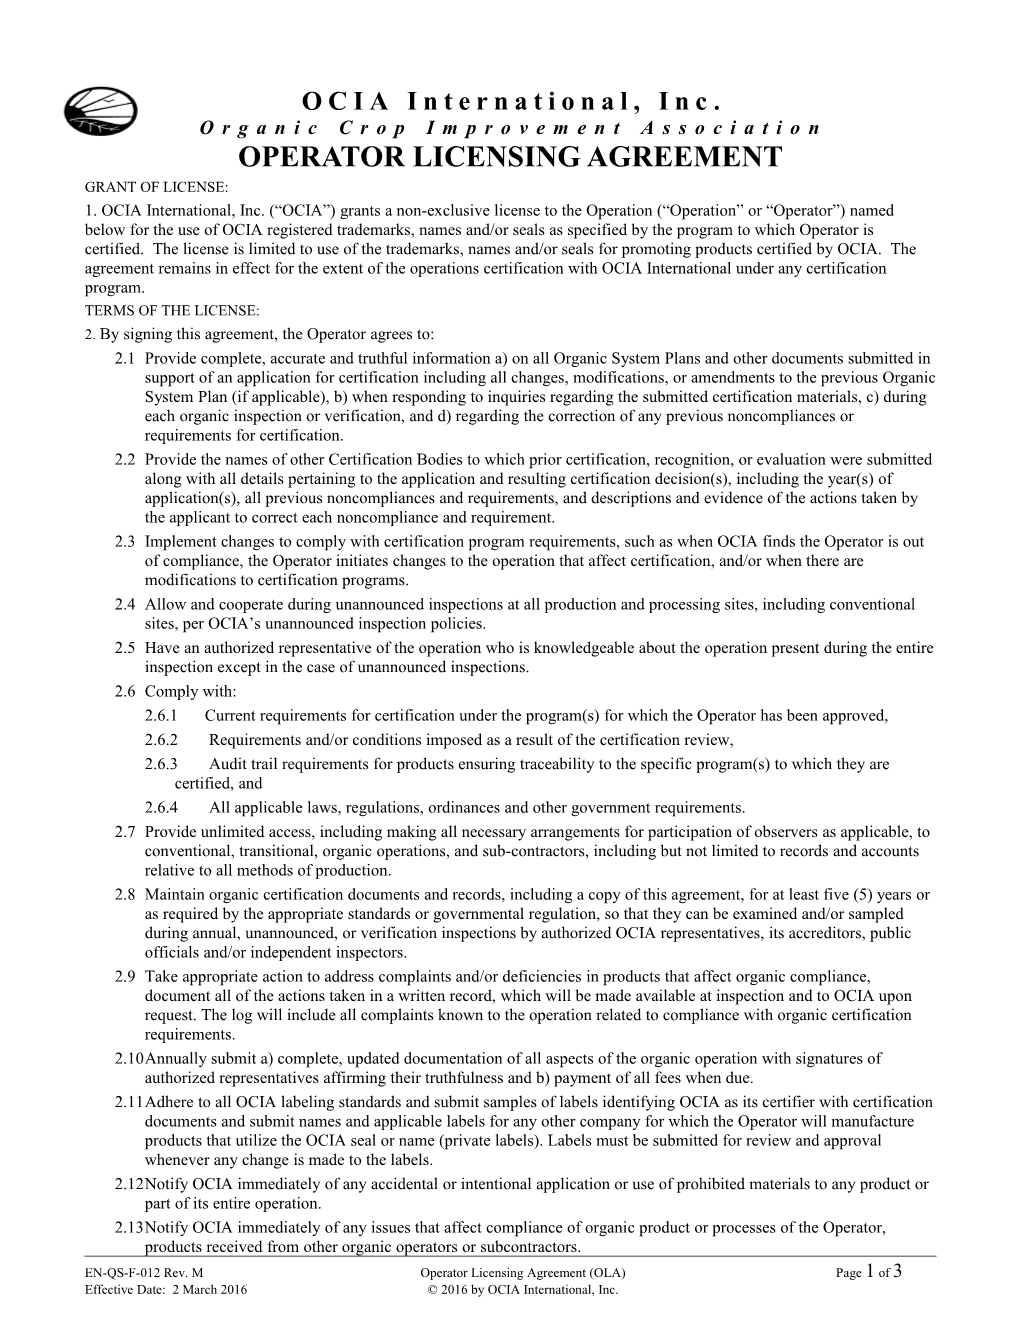 Operator Licensing Agreement